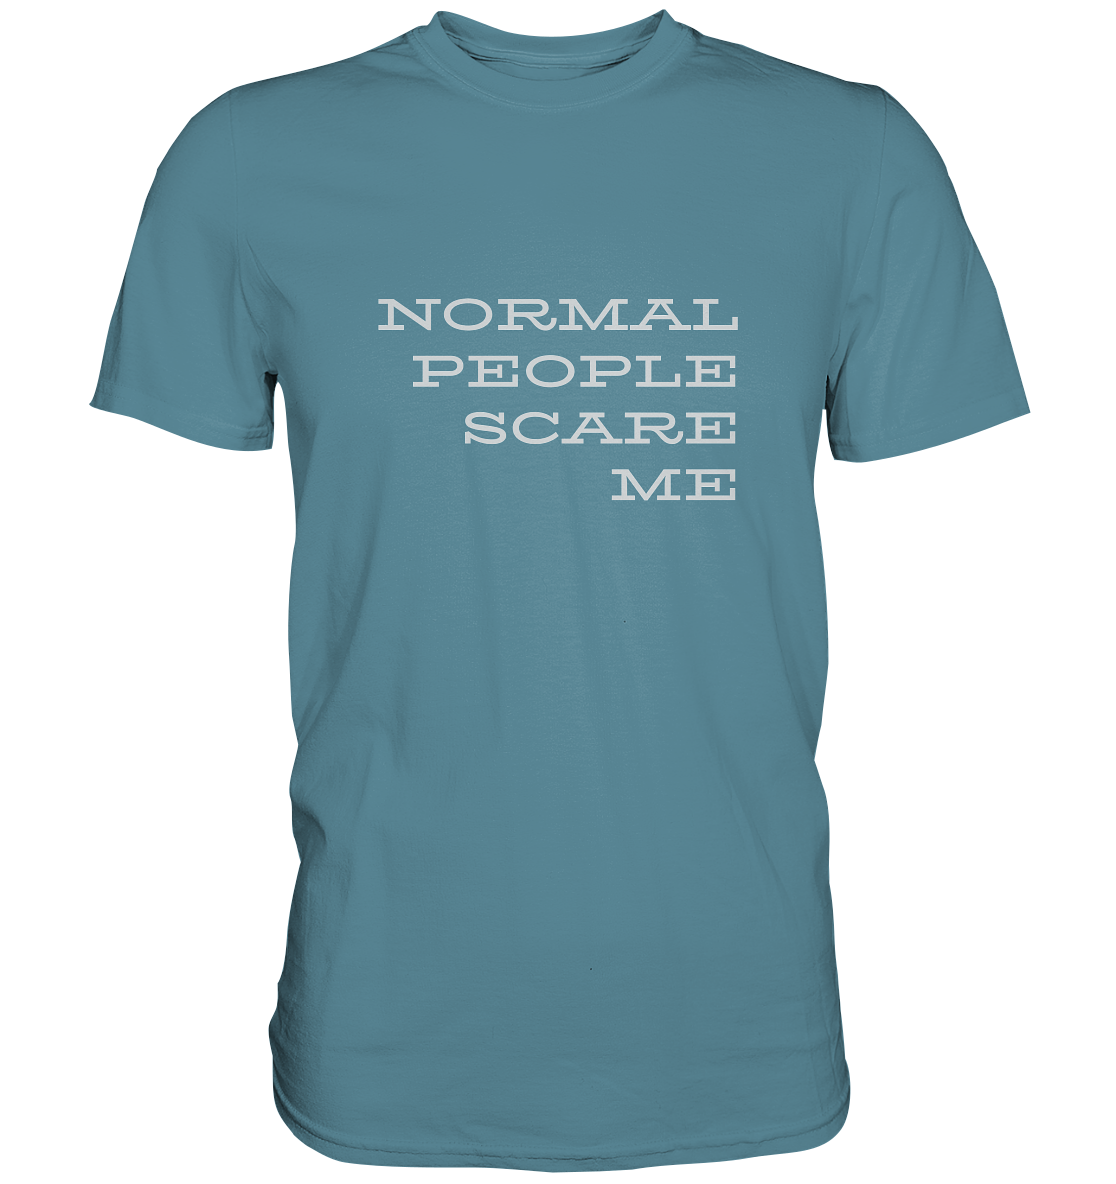 Herren-T-Shirt mit Aufdruck "Normal people scare me", hell blau